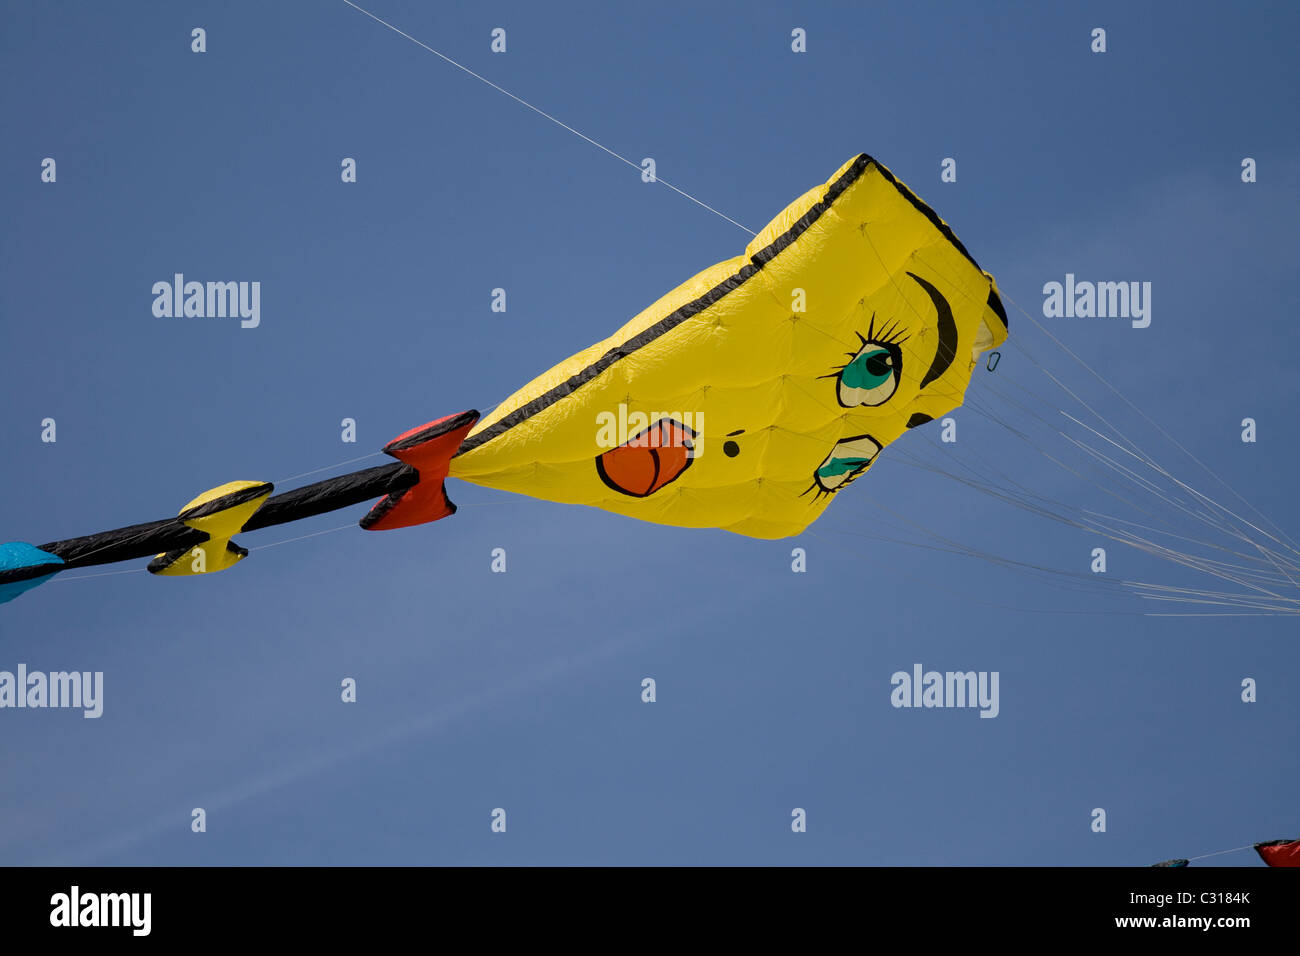 A large happy face kite at Streatham Park, family kite day. Stock Photo